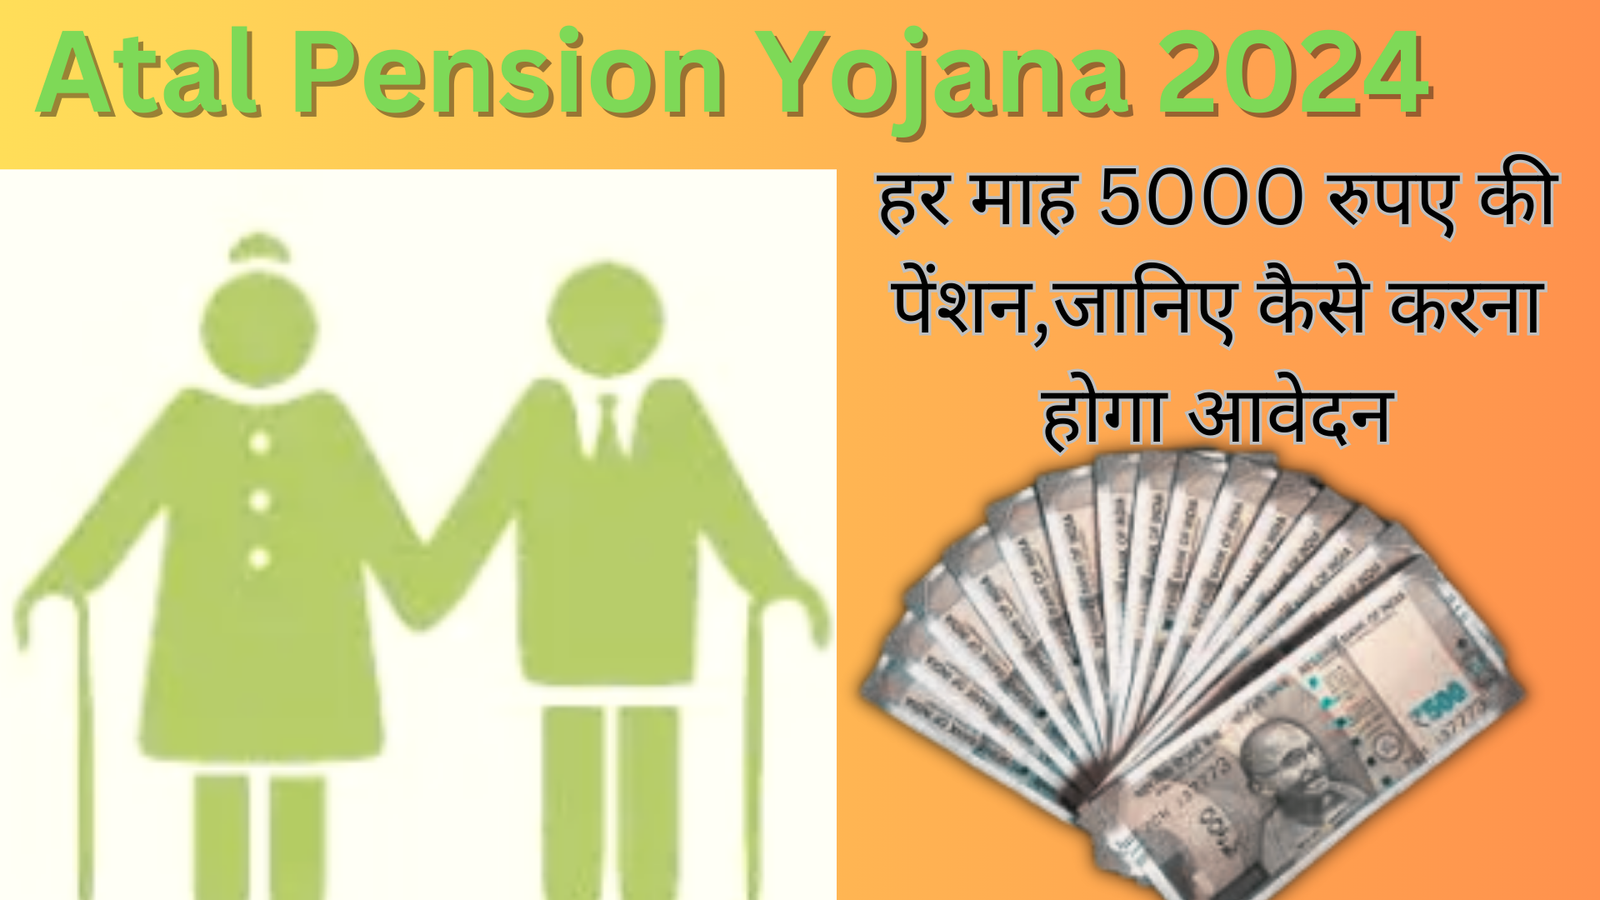 Atal Pension Yojana 2024